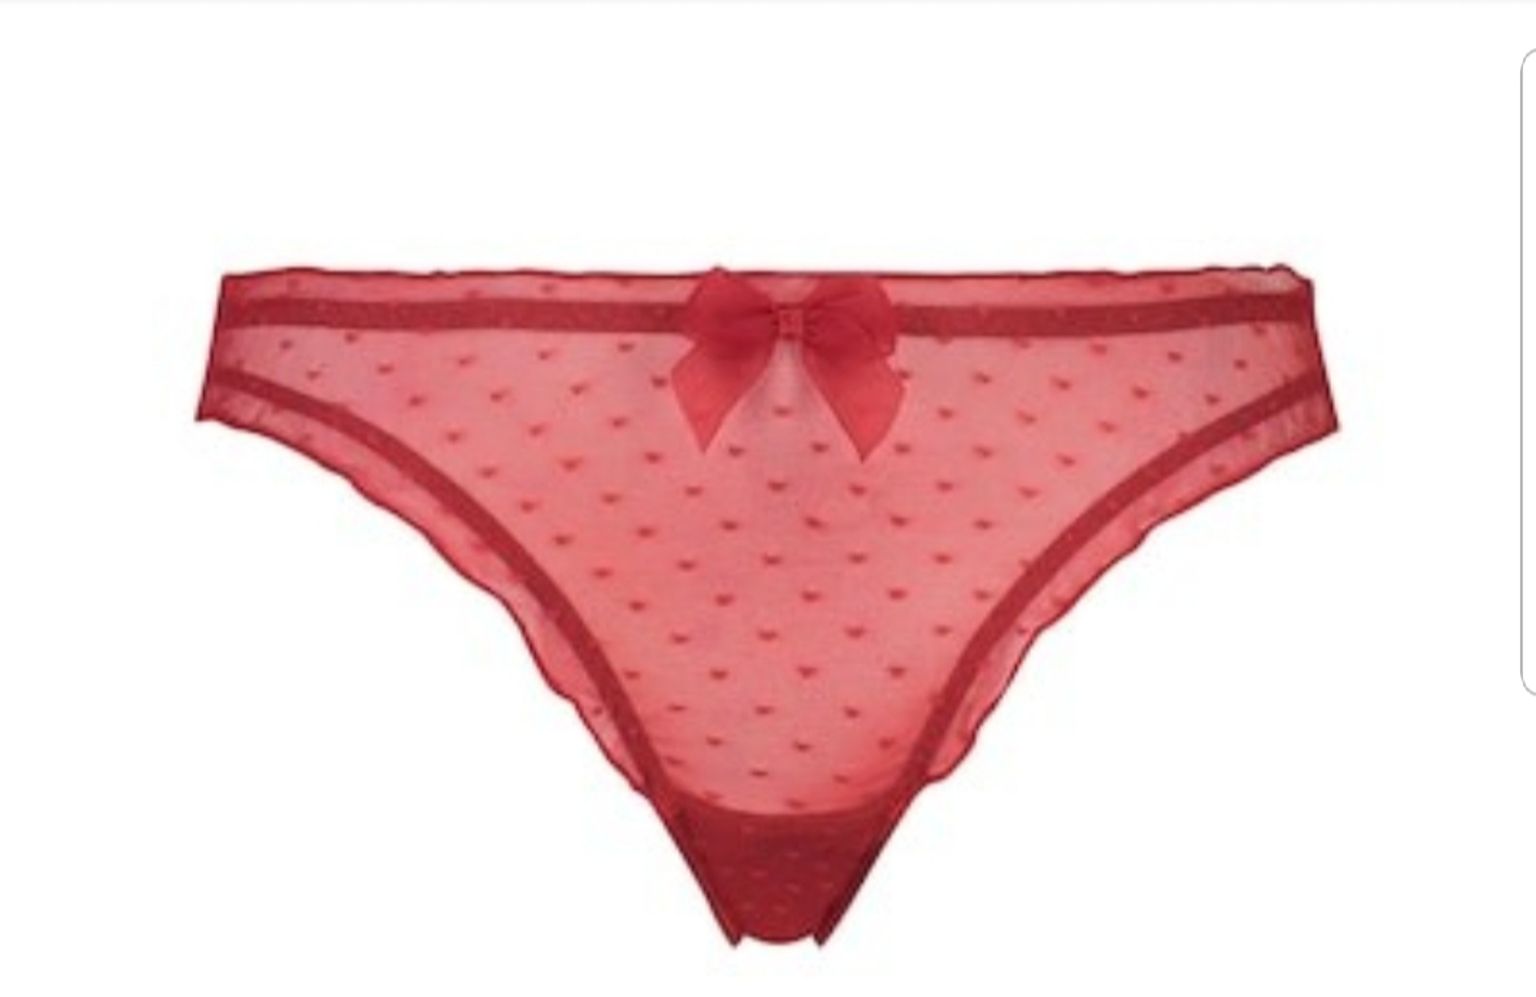 Hunkemöller is one of the largest European brands specialising in underwear.